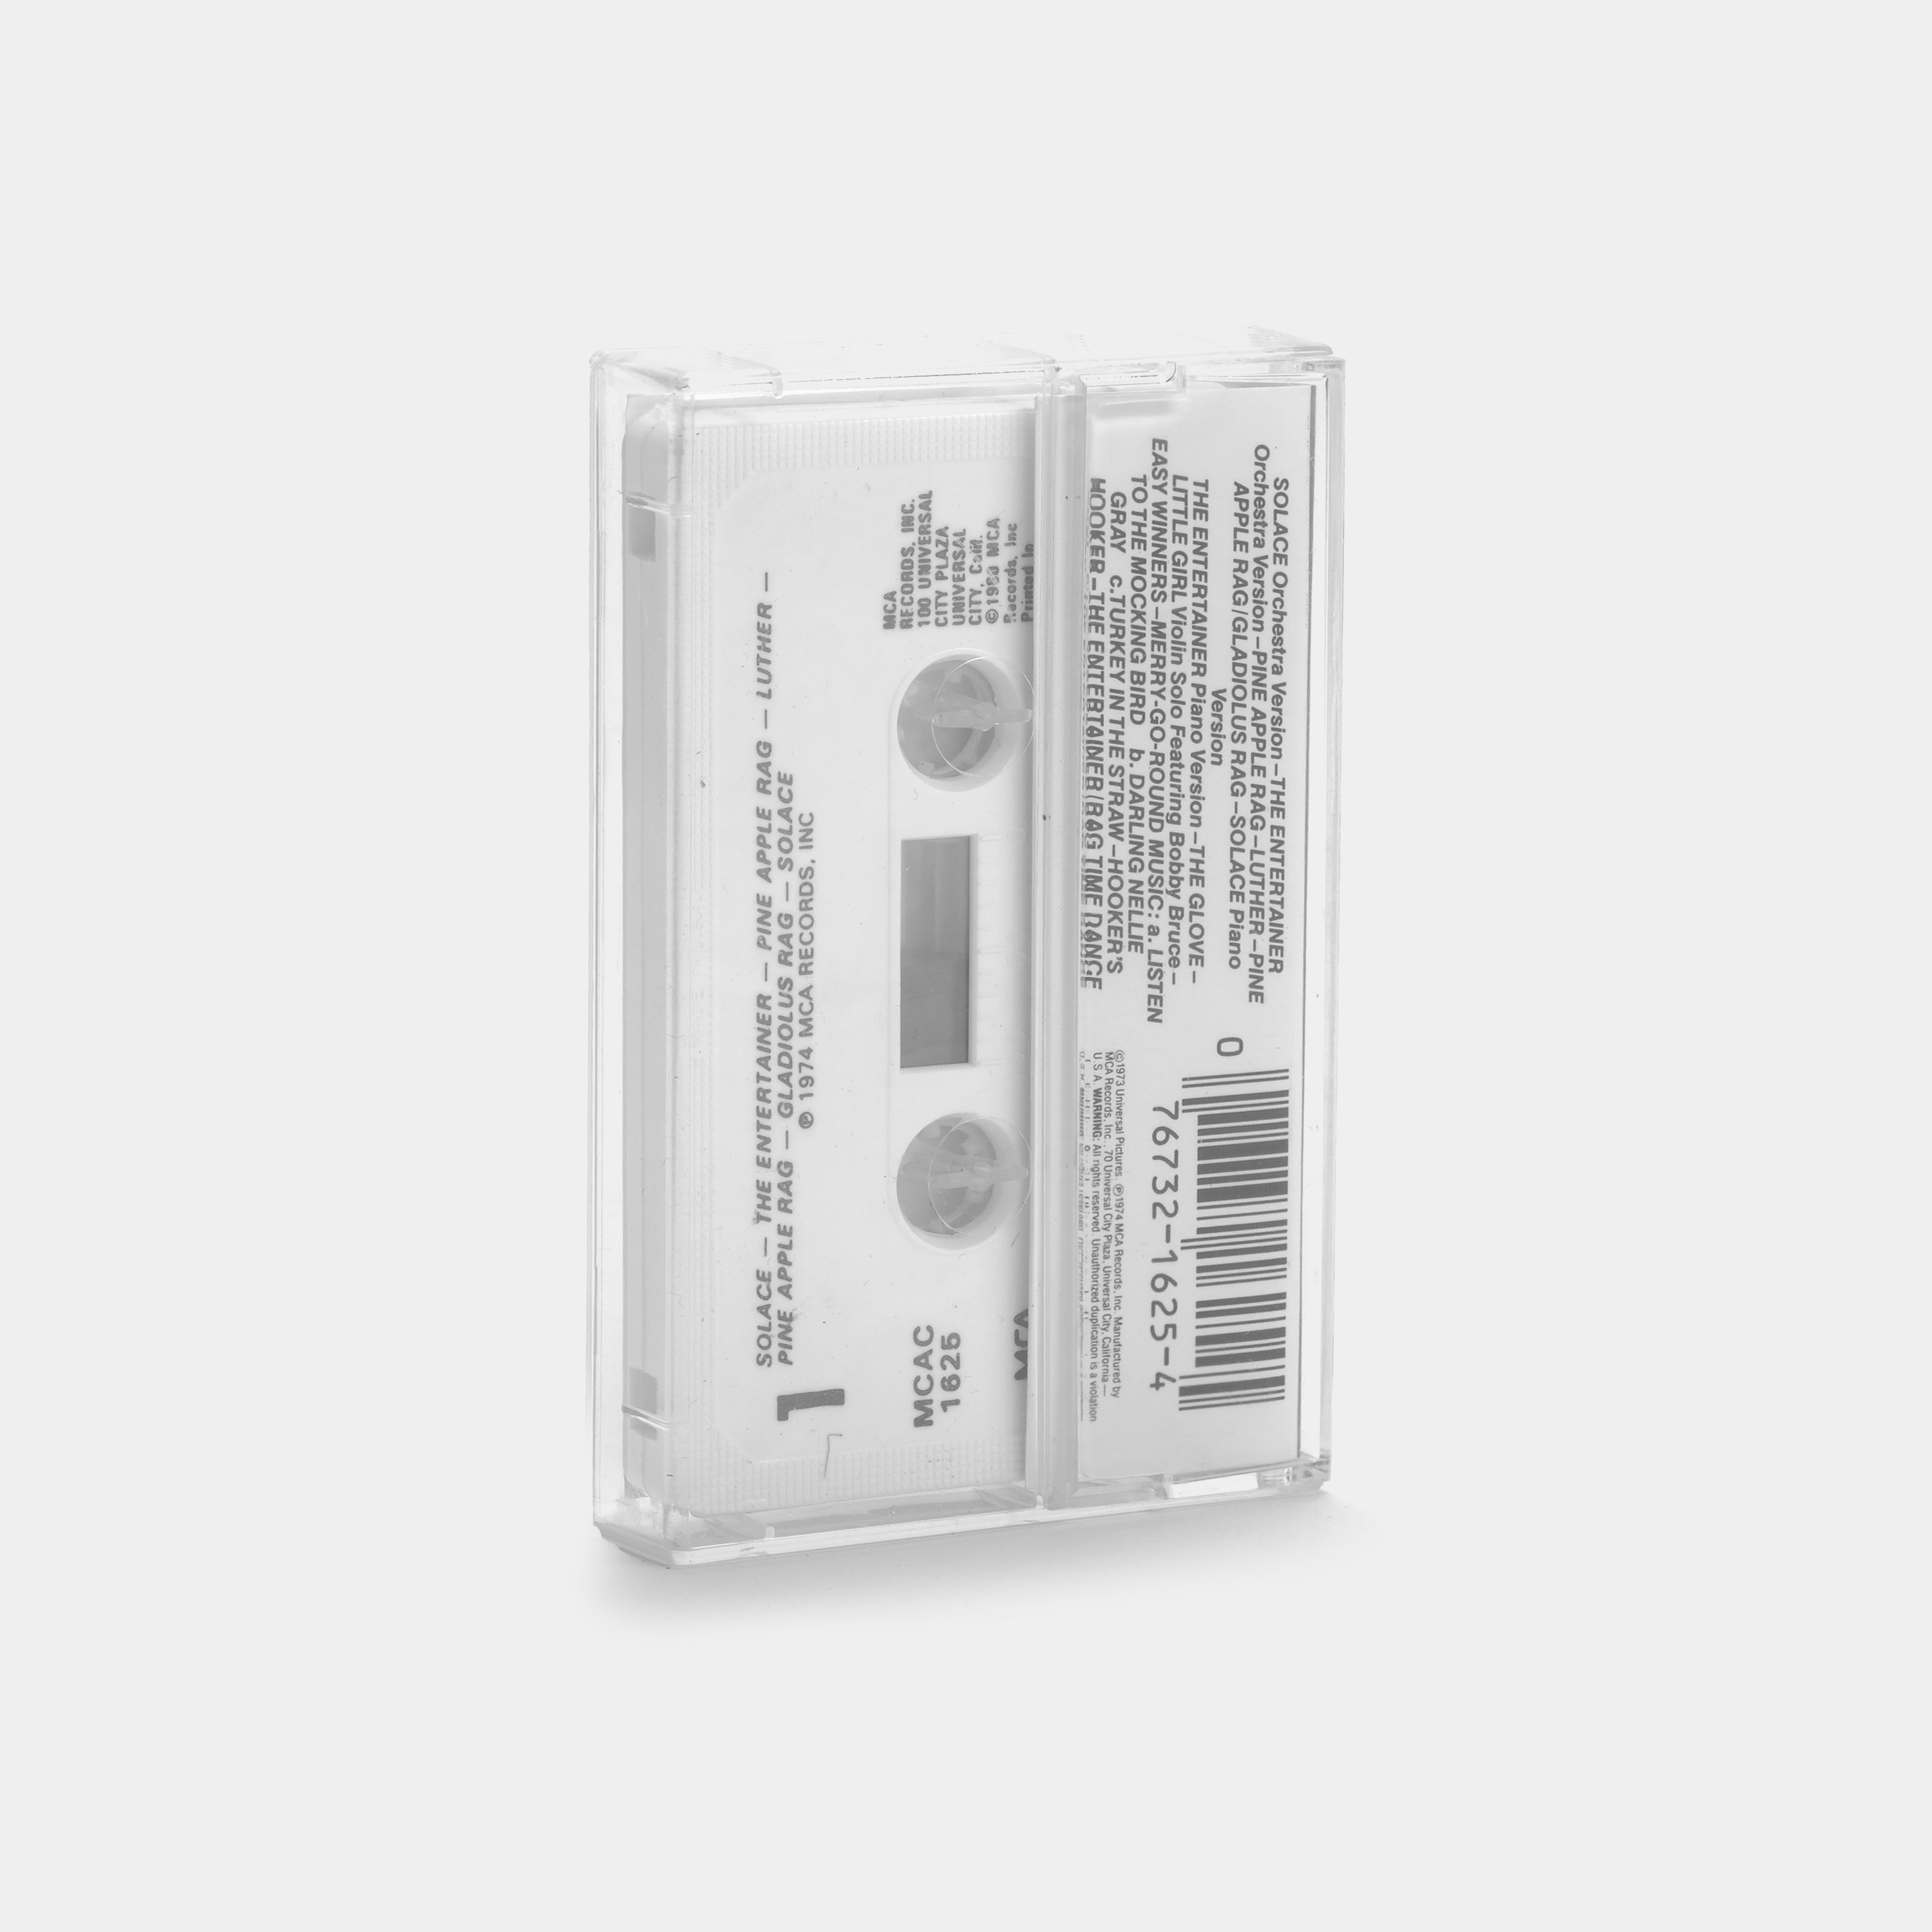 The Sting (Original Motion Picture Soundtrack) Cassette Tape